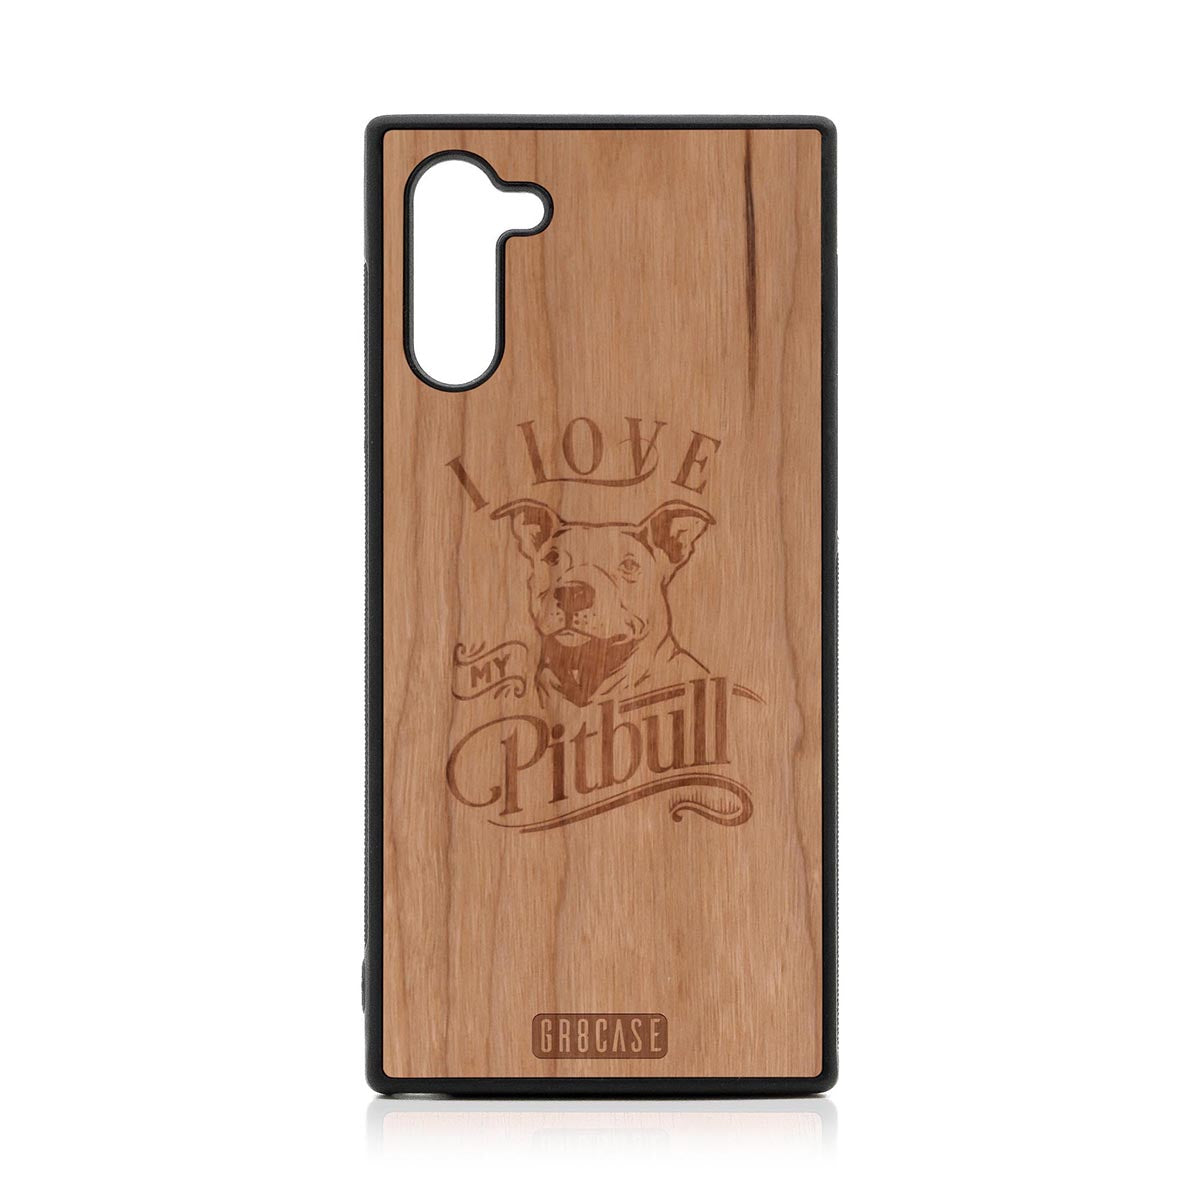 I Love My Pitbull Design Wood Case Samsung Galaxy Note 10 by GR8CASE